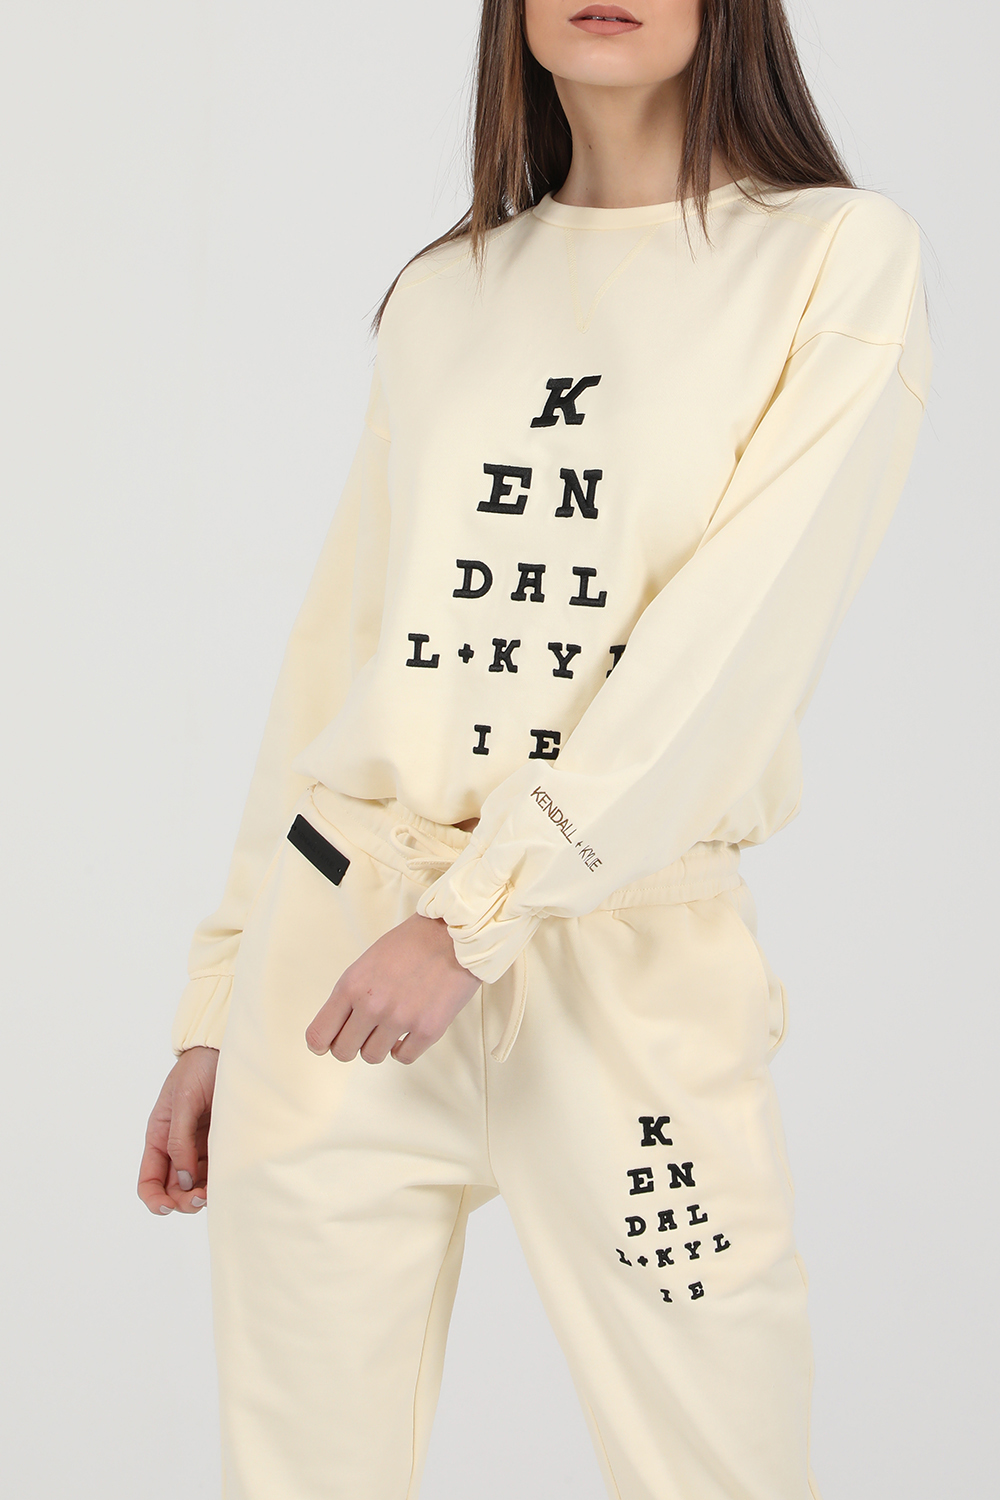 KENDALL+KYLIE – Γυναικεια φουτερ μπλουζα KENDALL+KYLIE κιτρινη